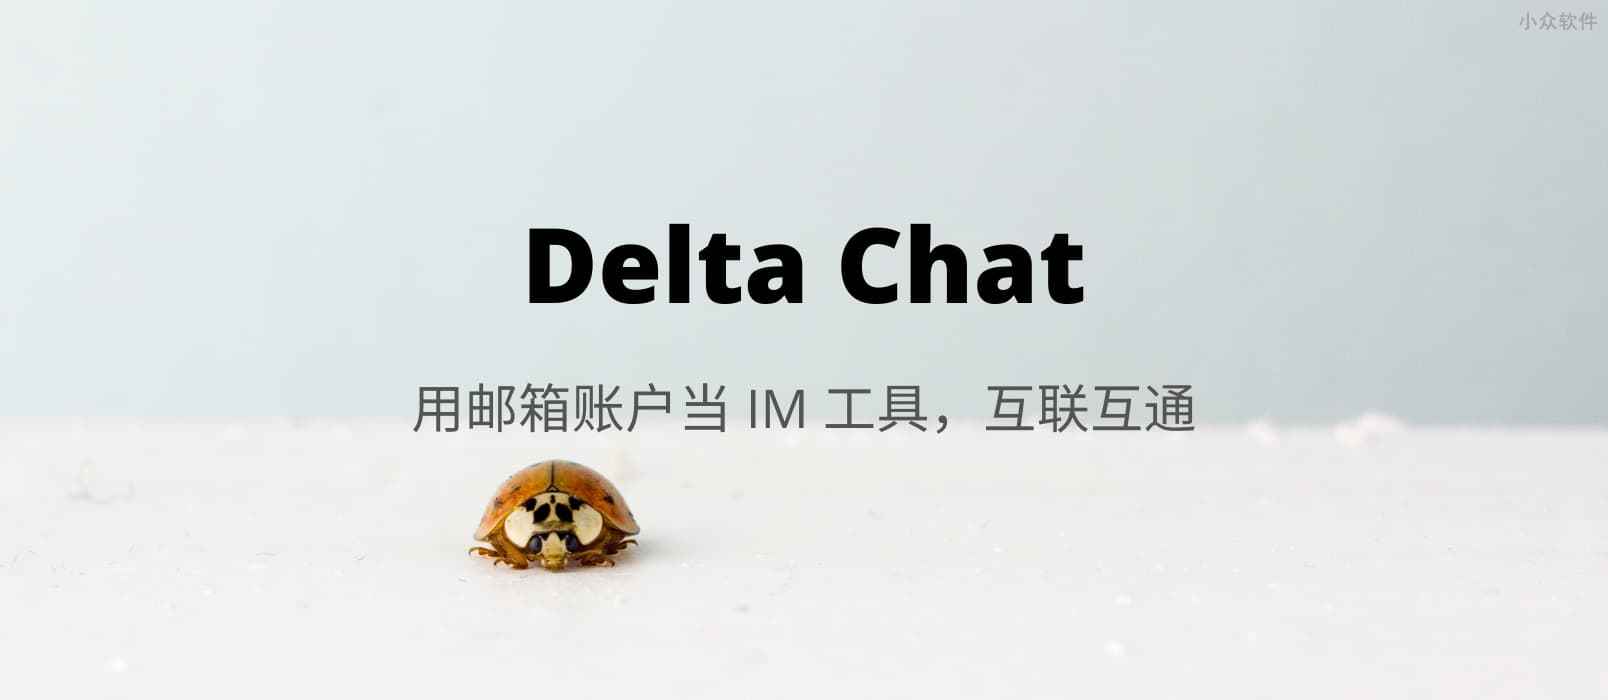 Delta Chat – 如果早 10 年，用邮件当 IM 可能会火